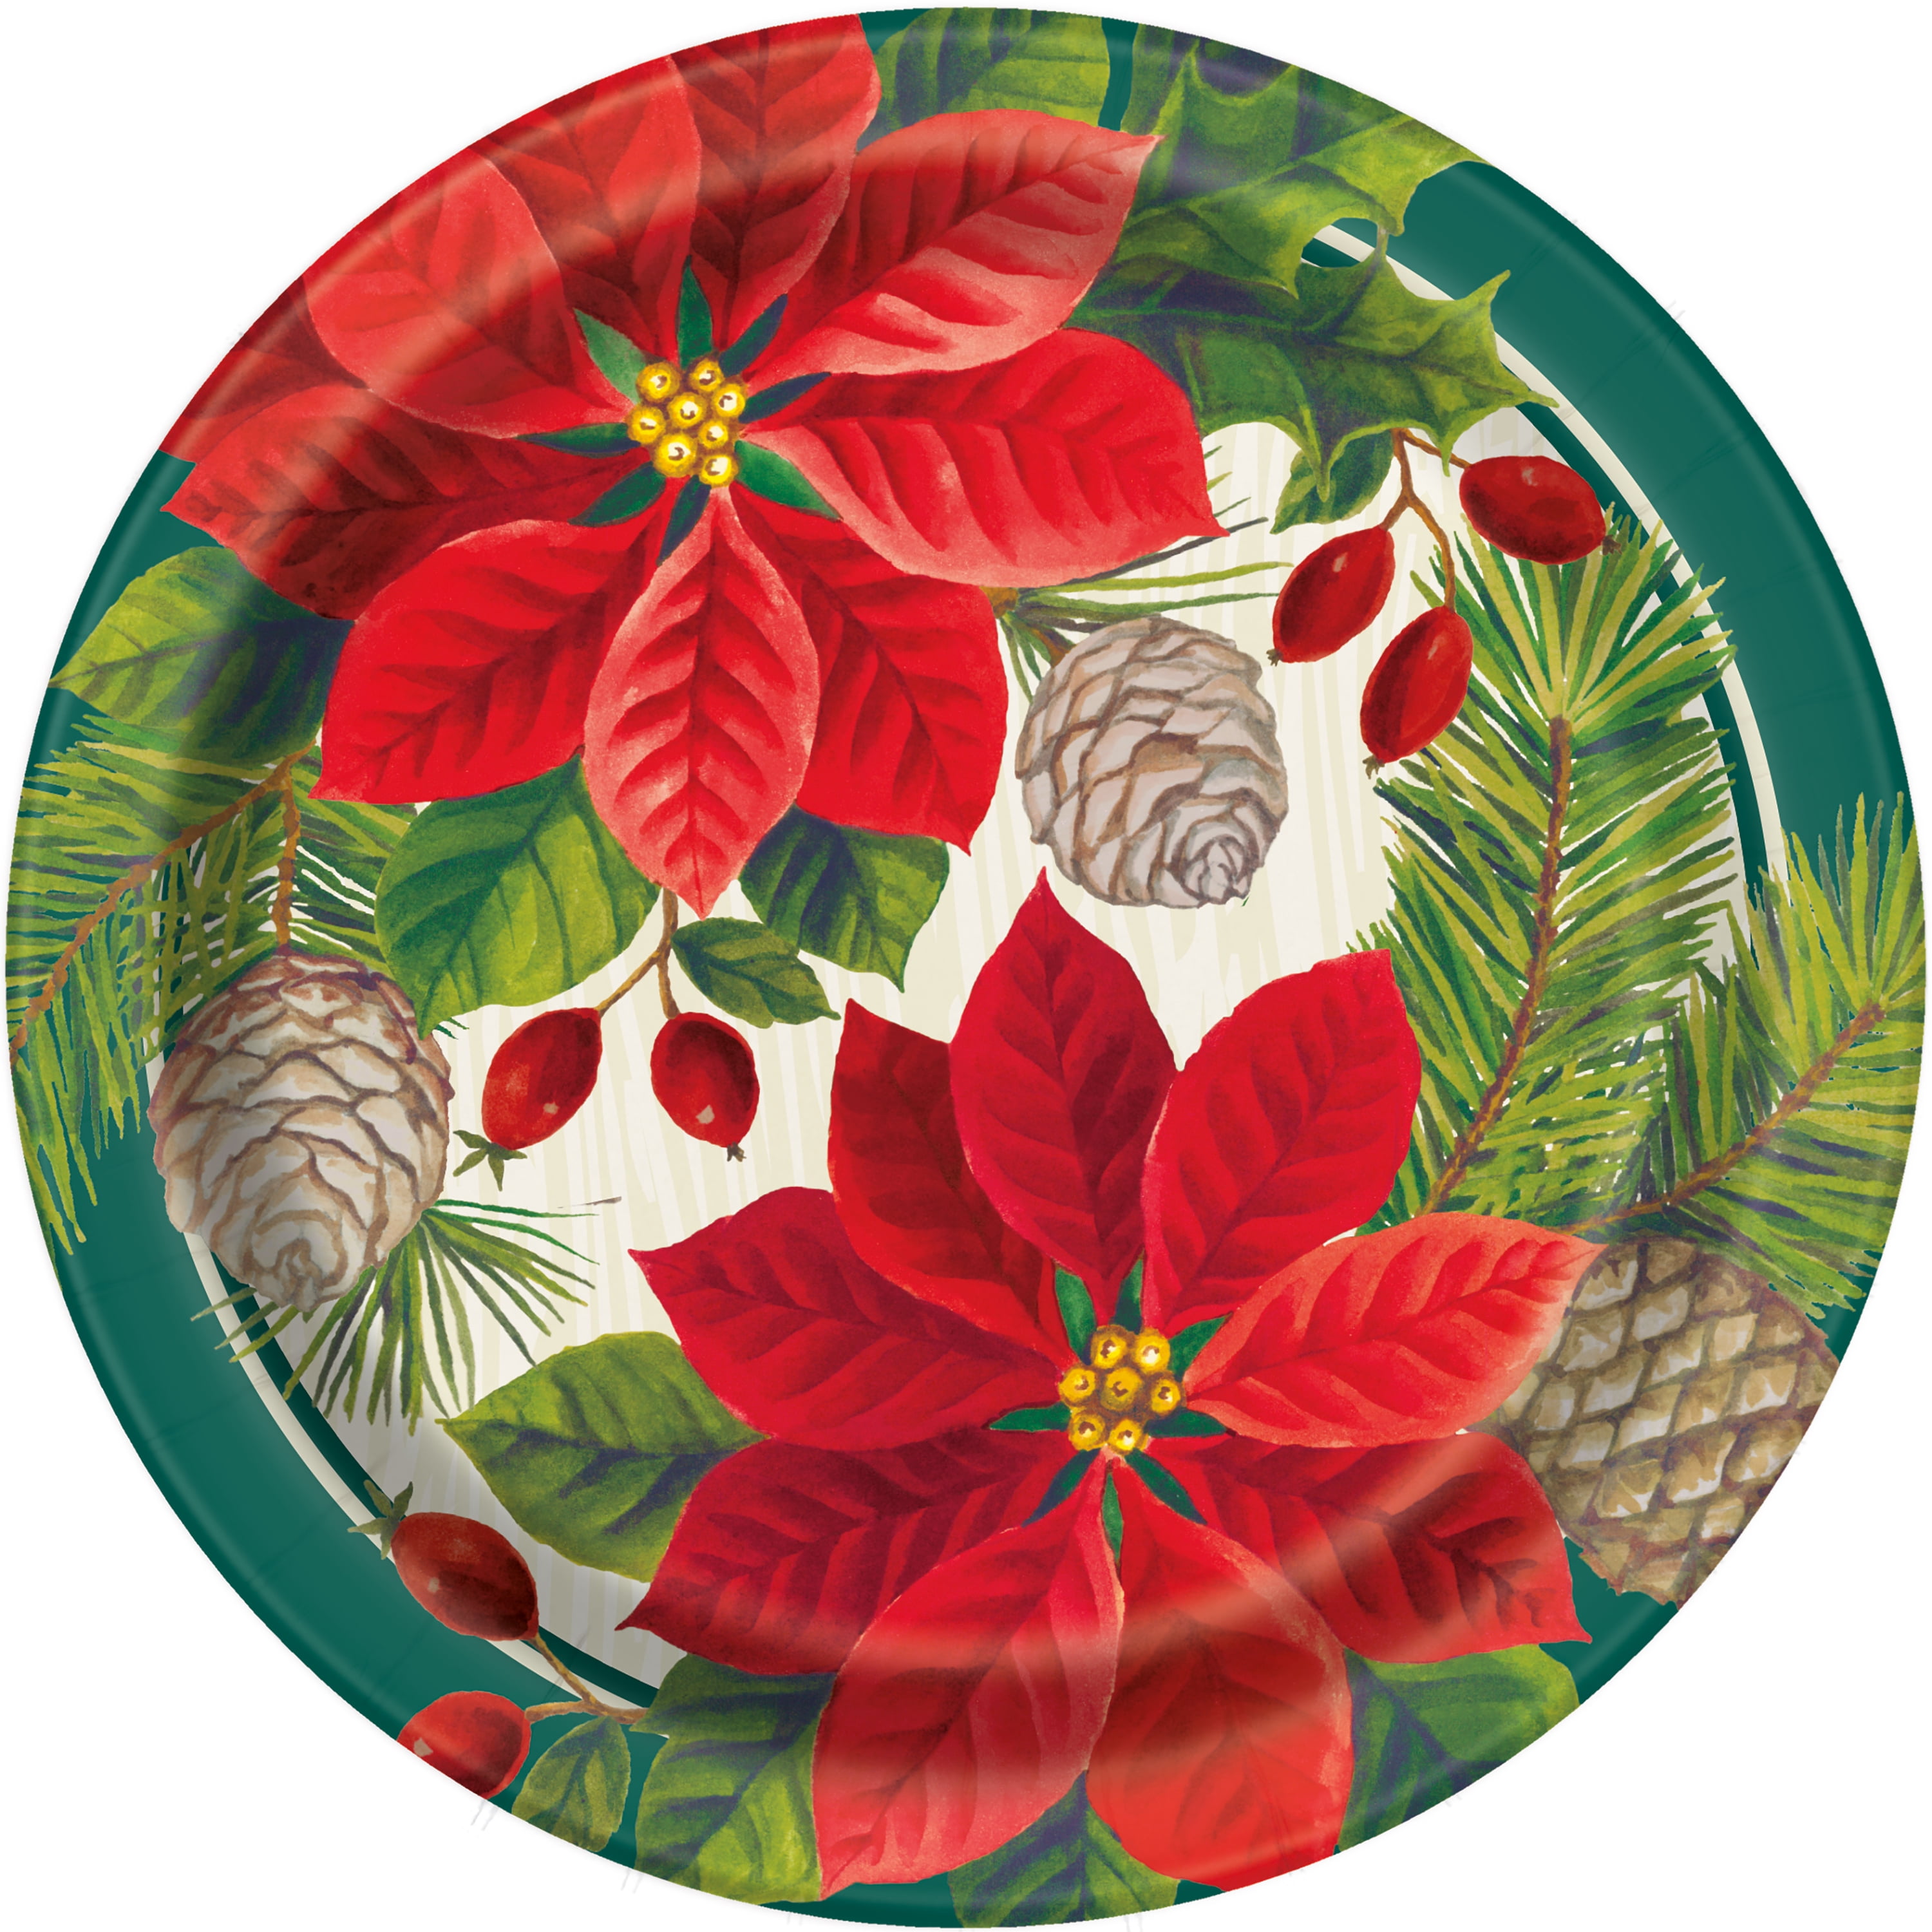 120 Pcs Christmas Paper Bowls - Festive Red, Green & White